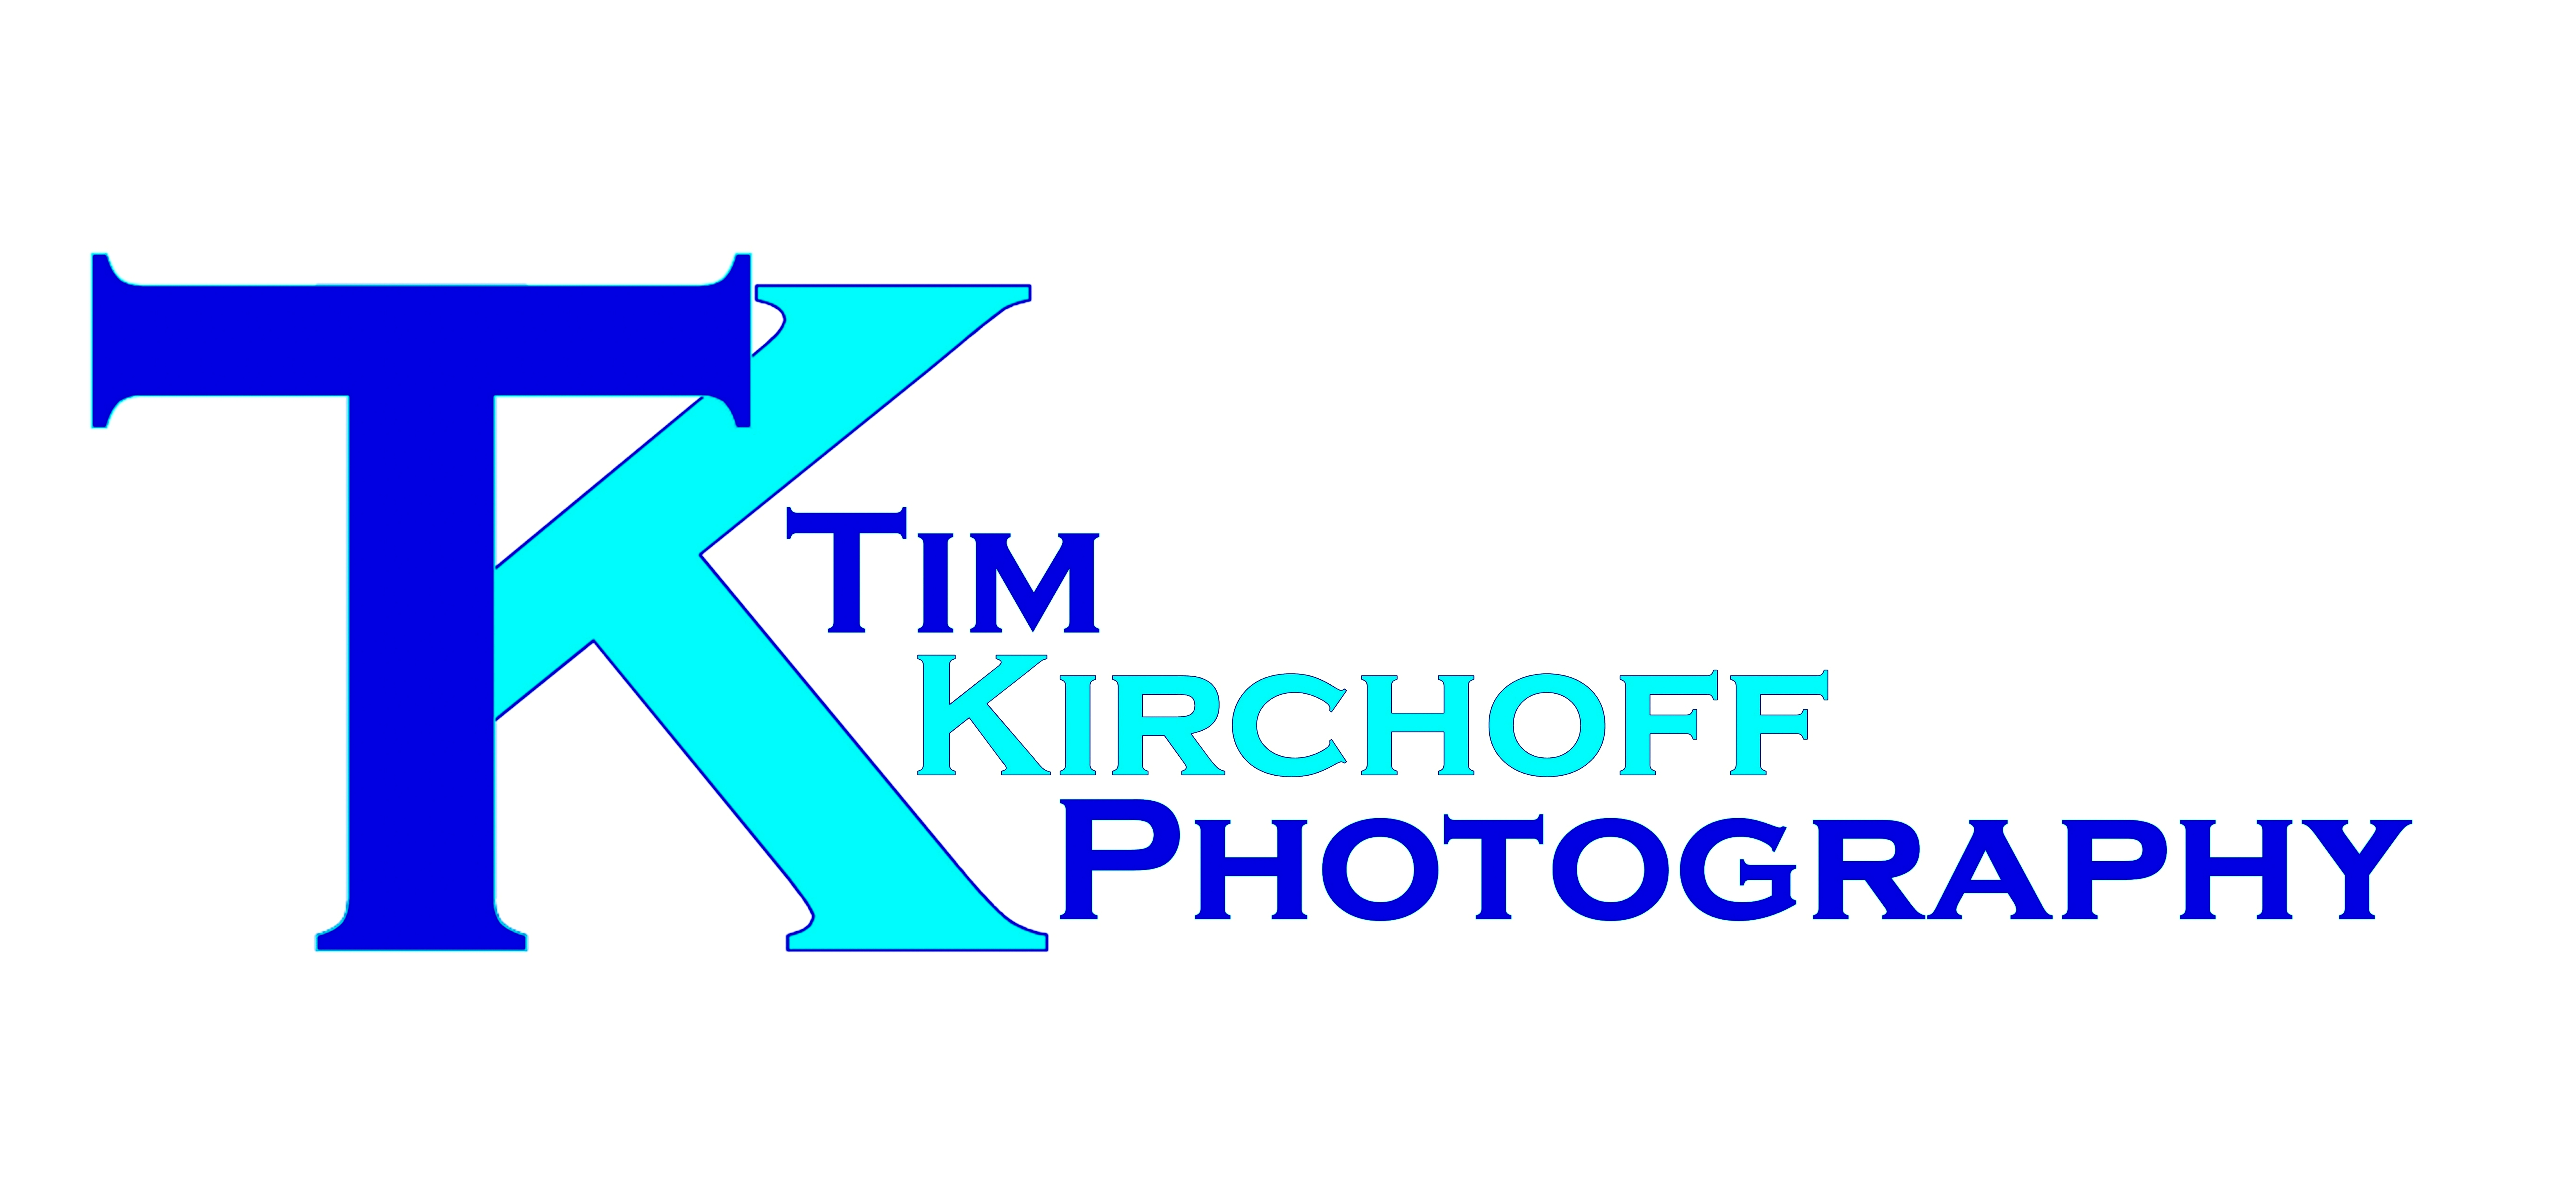 Tim Kirchoff - Website